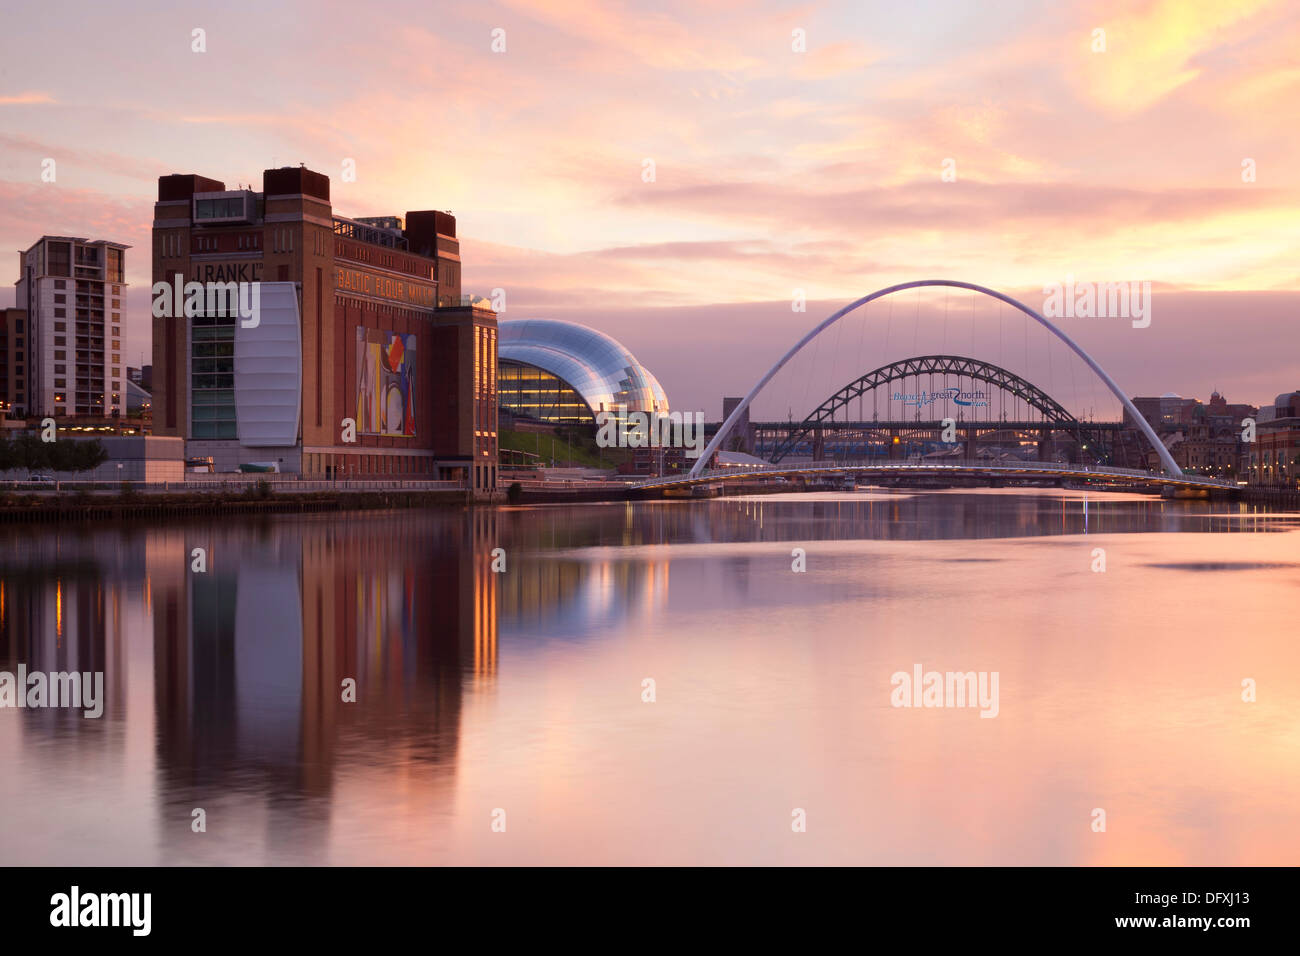 The Newcastle and Gateshead Quayside at dusk, showing the Millennium Bridge, Sage Gateshead and Baltic Stock Photo